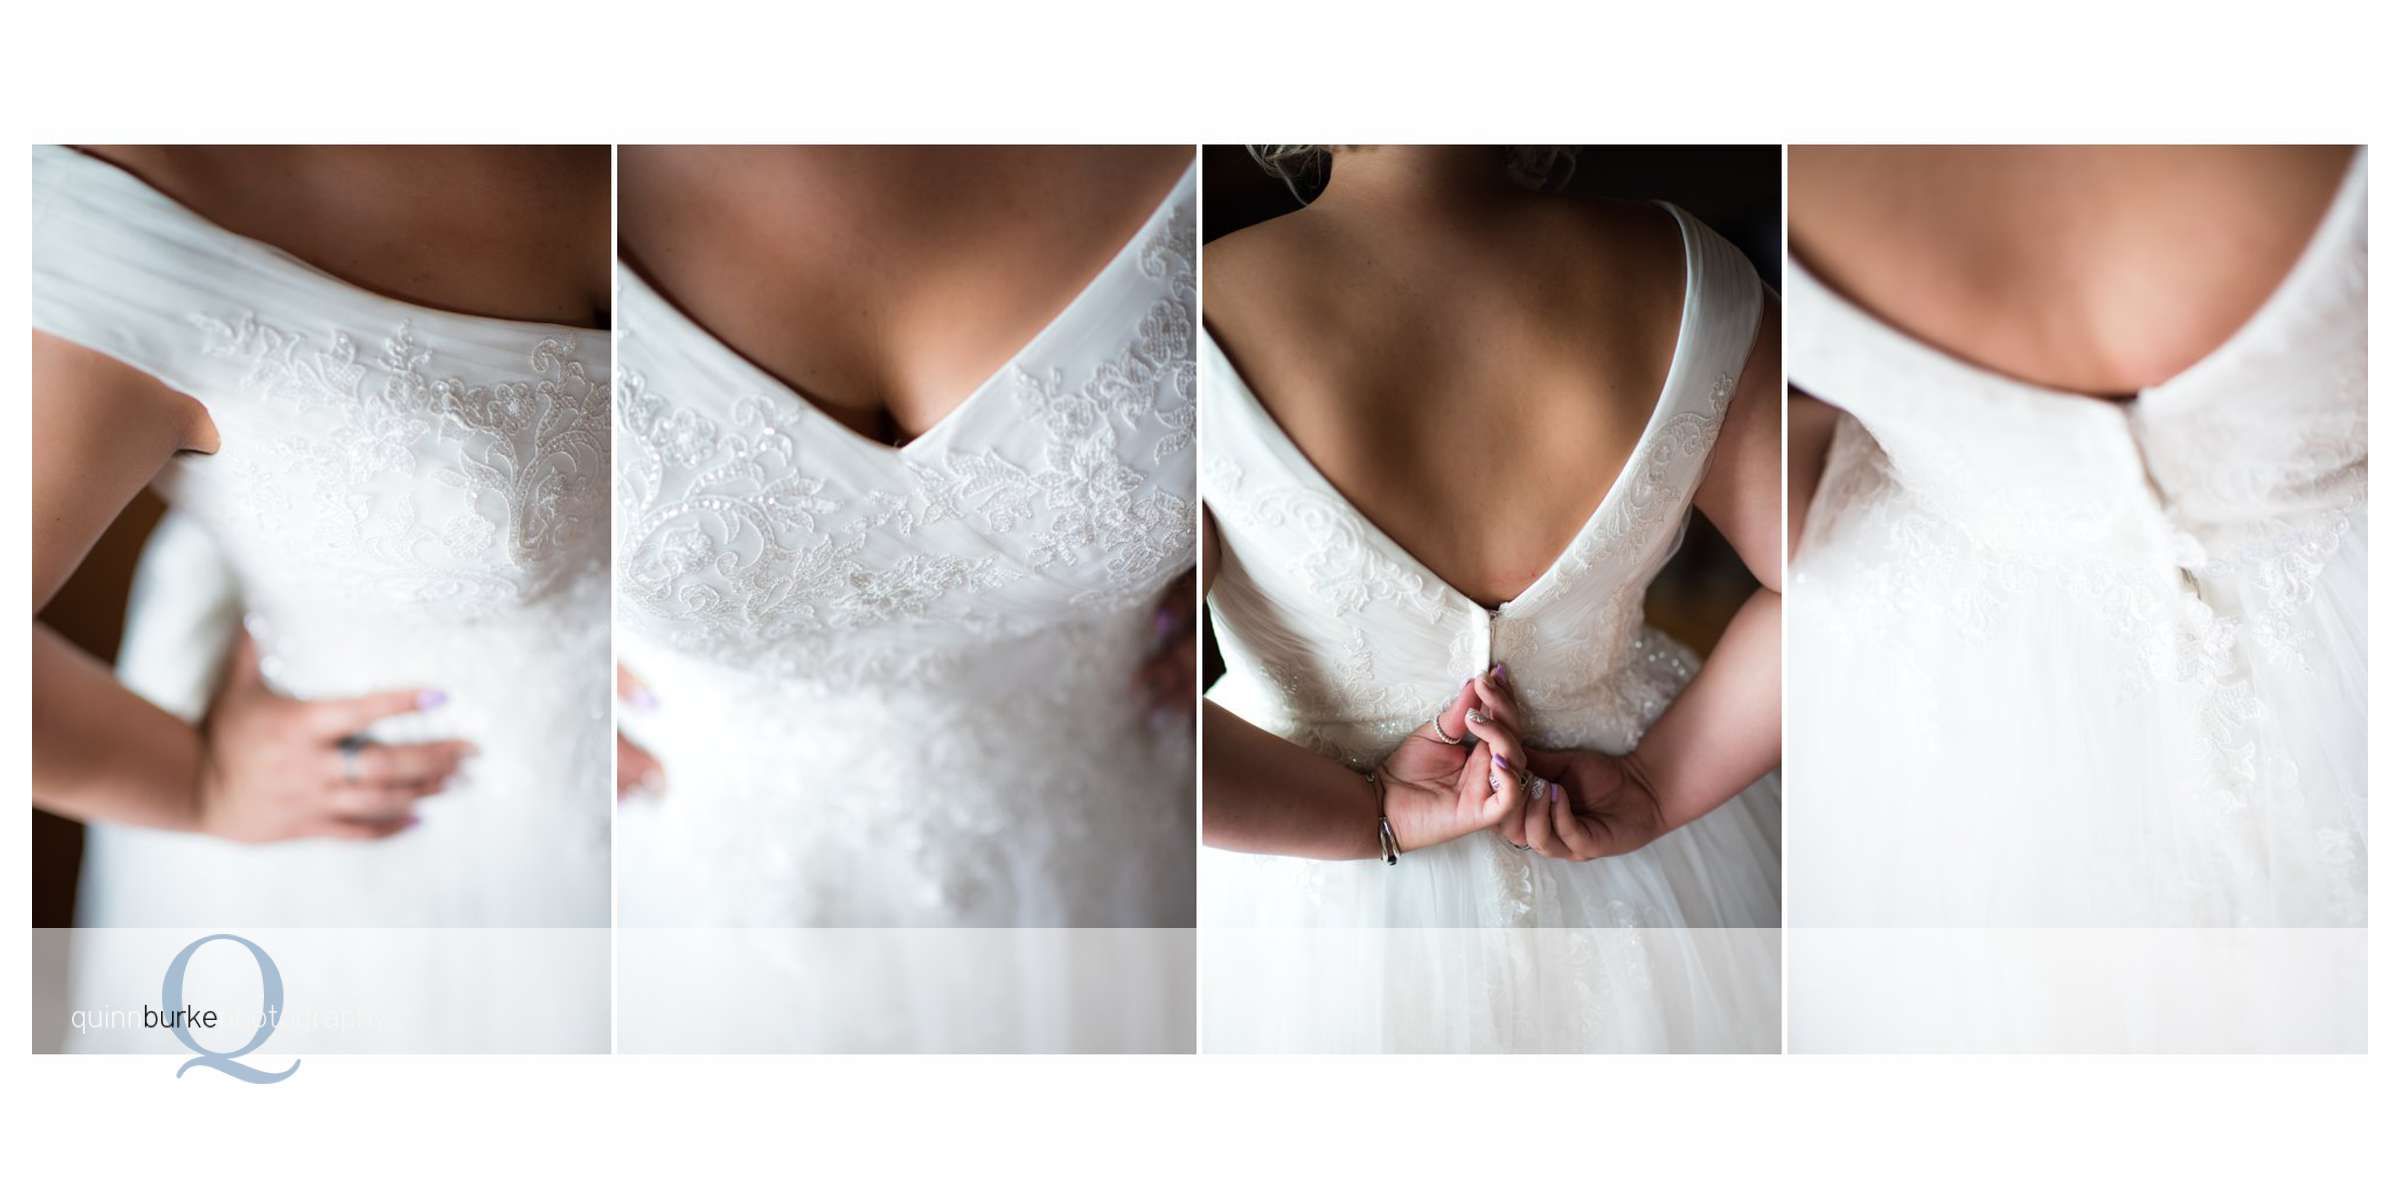 dress details of the bride